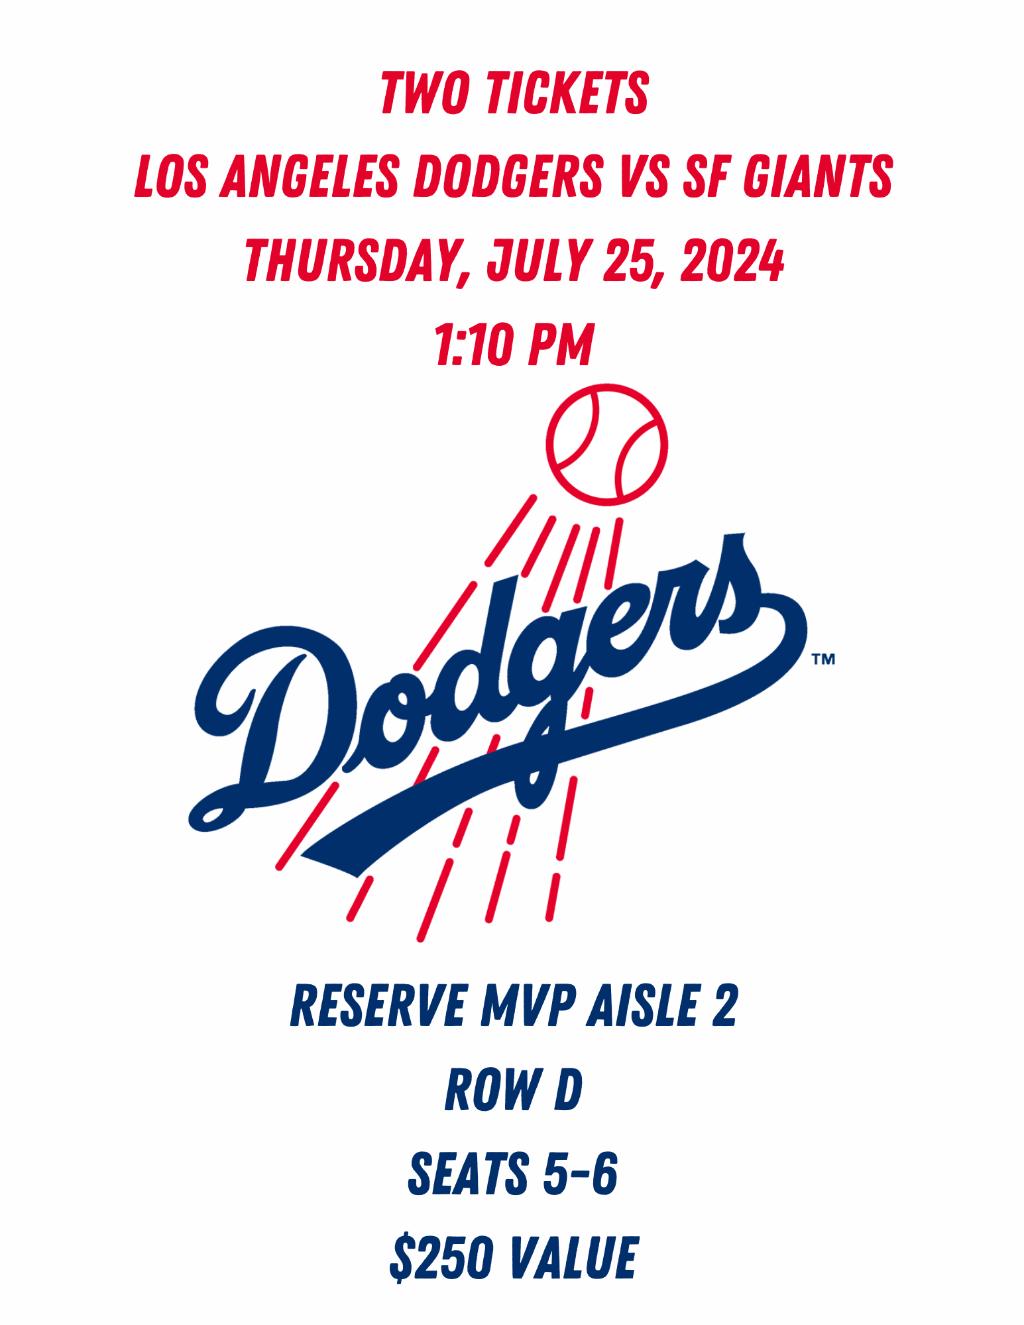 Los Angeles Dodgers vs. SF Giants Tickets